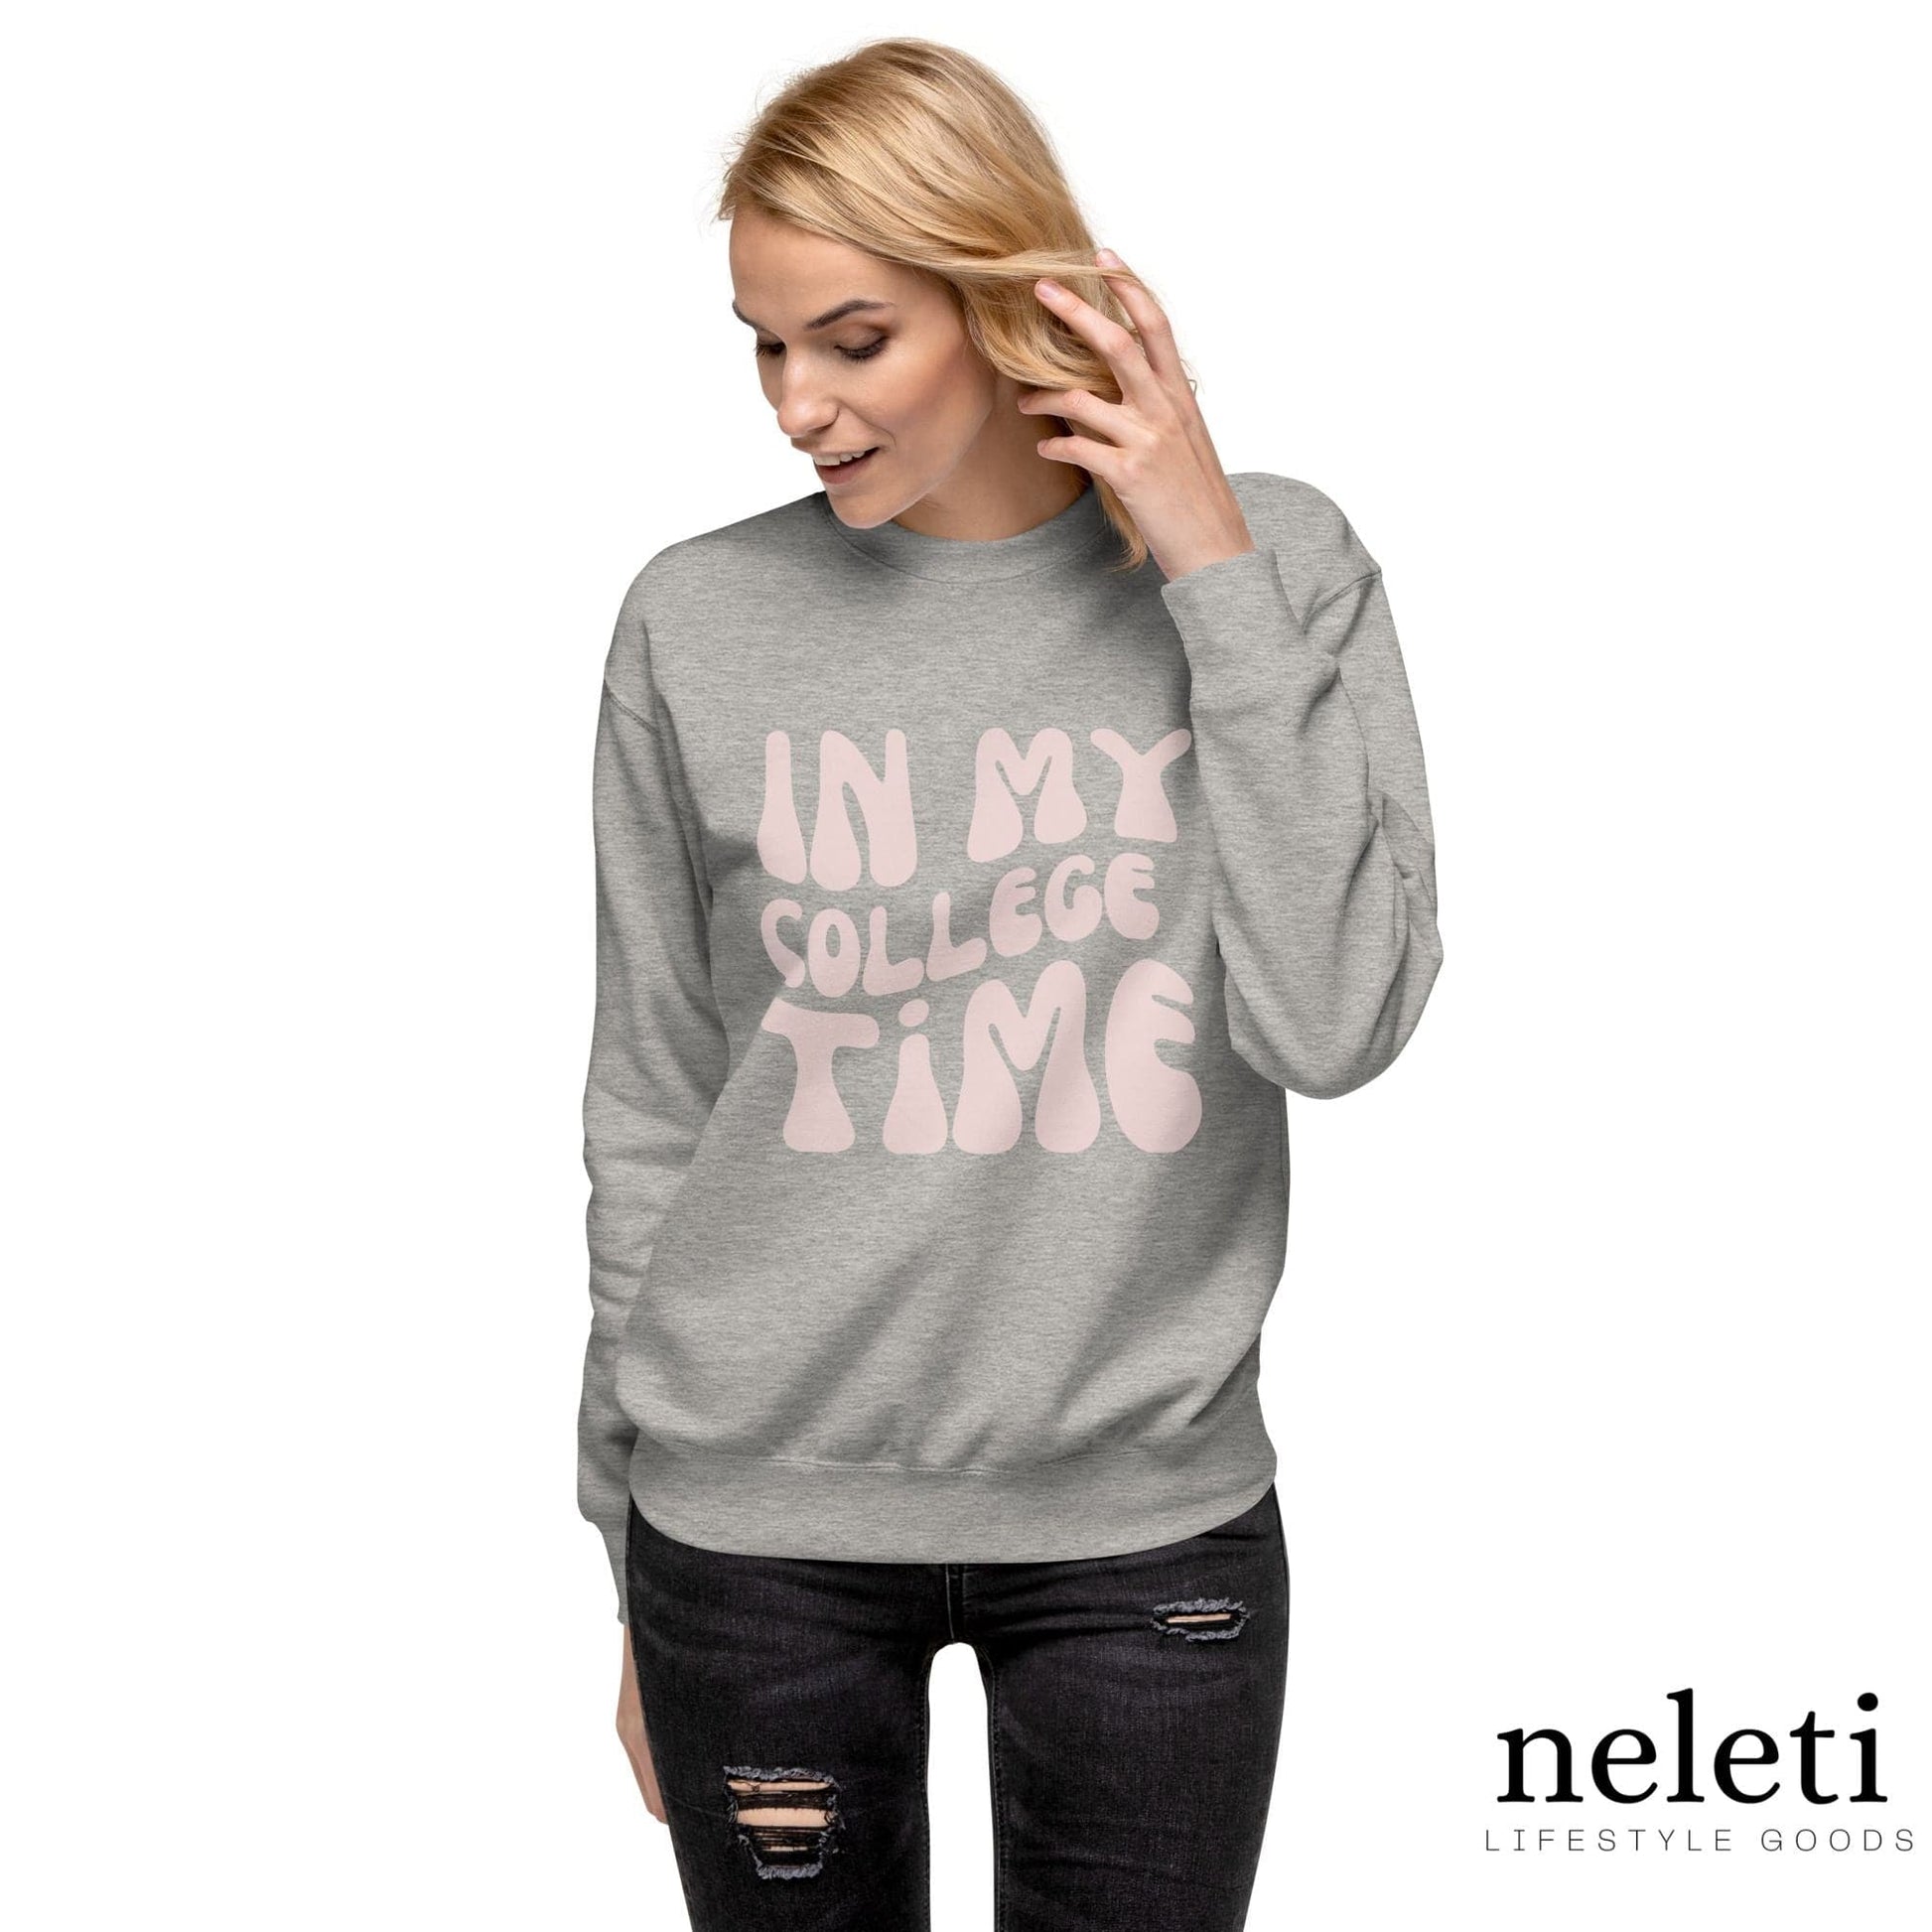 neleti.com-carbon-grey-men-women-sweatshirts